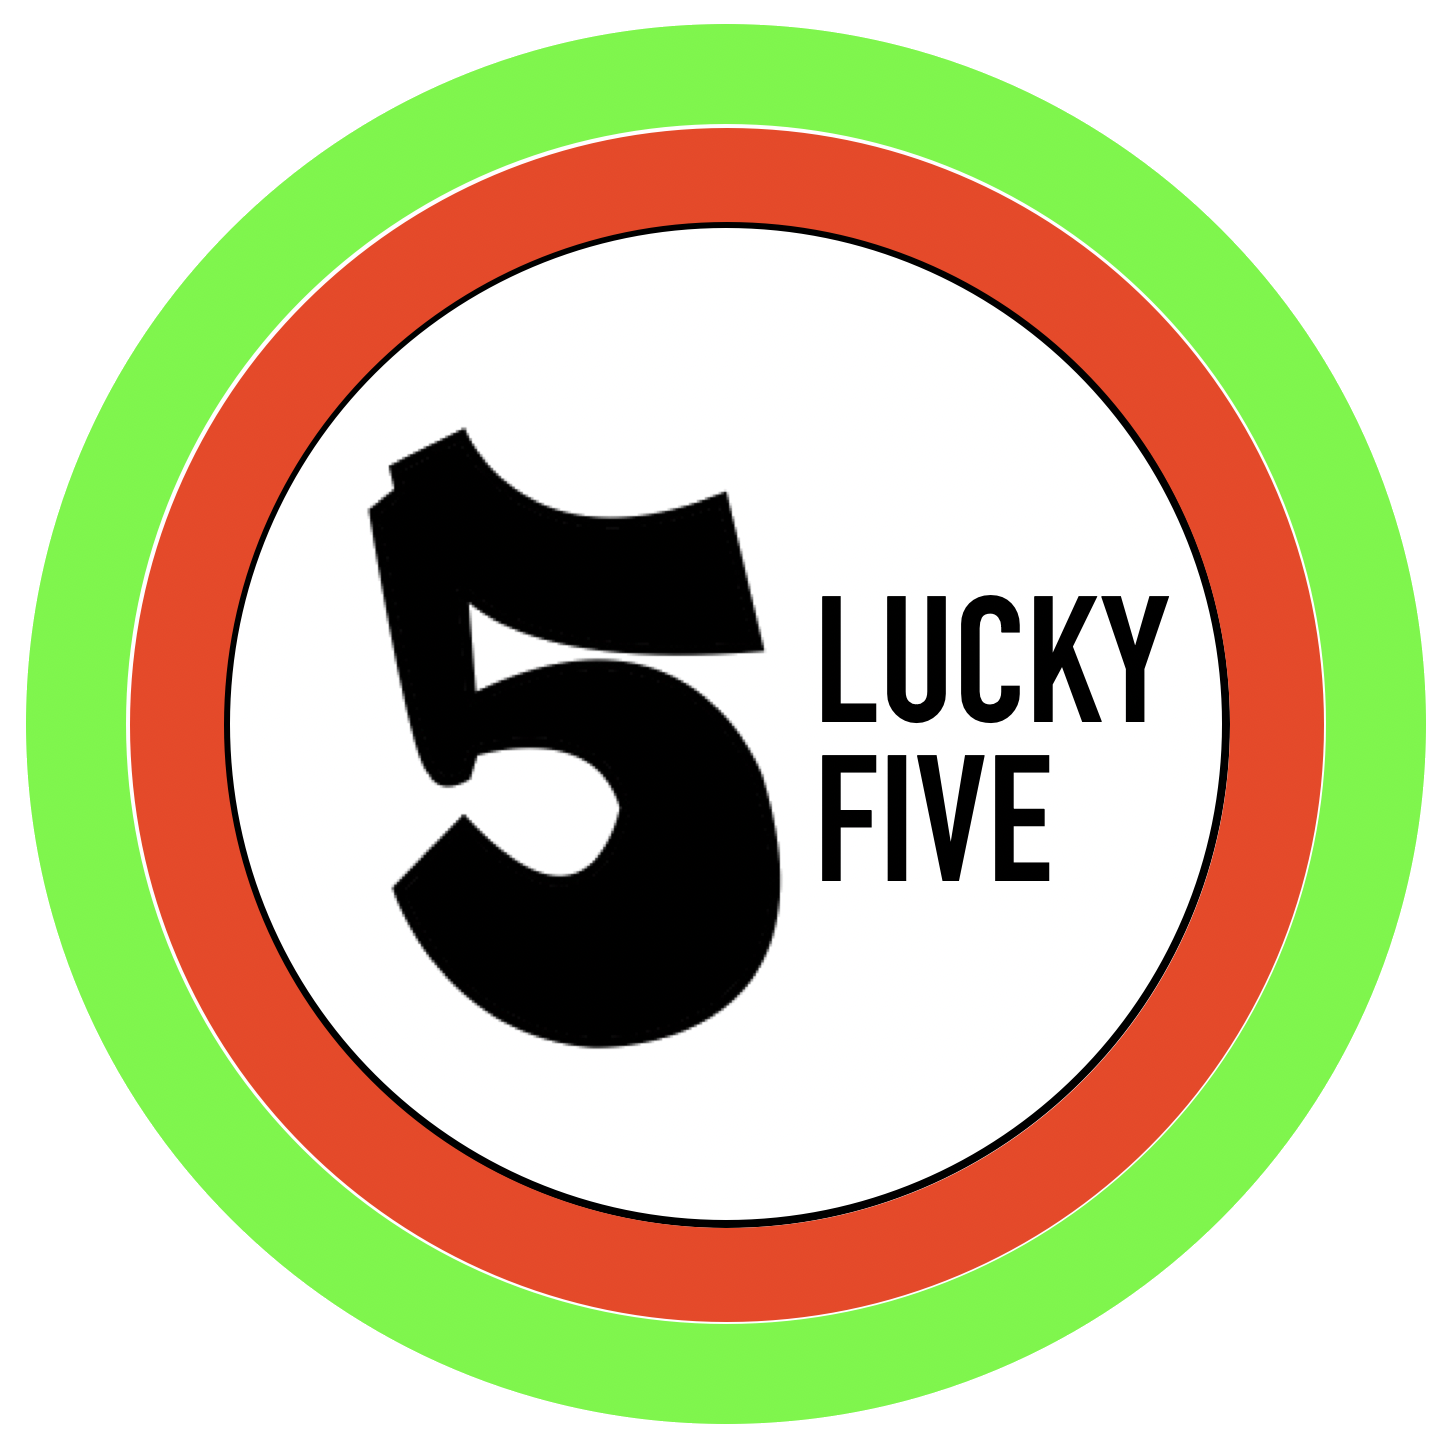 LUCKY FIVE